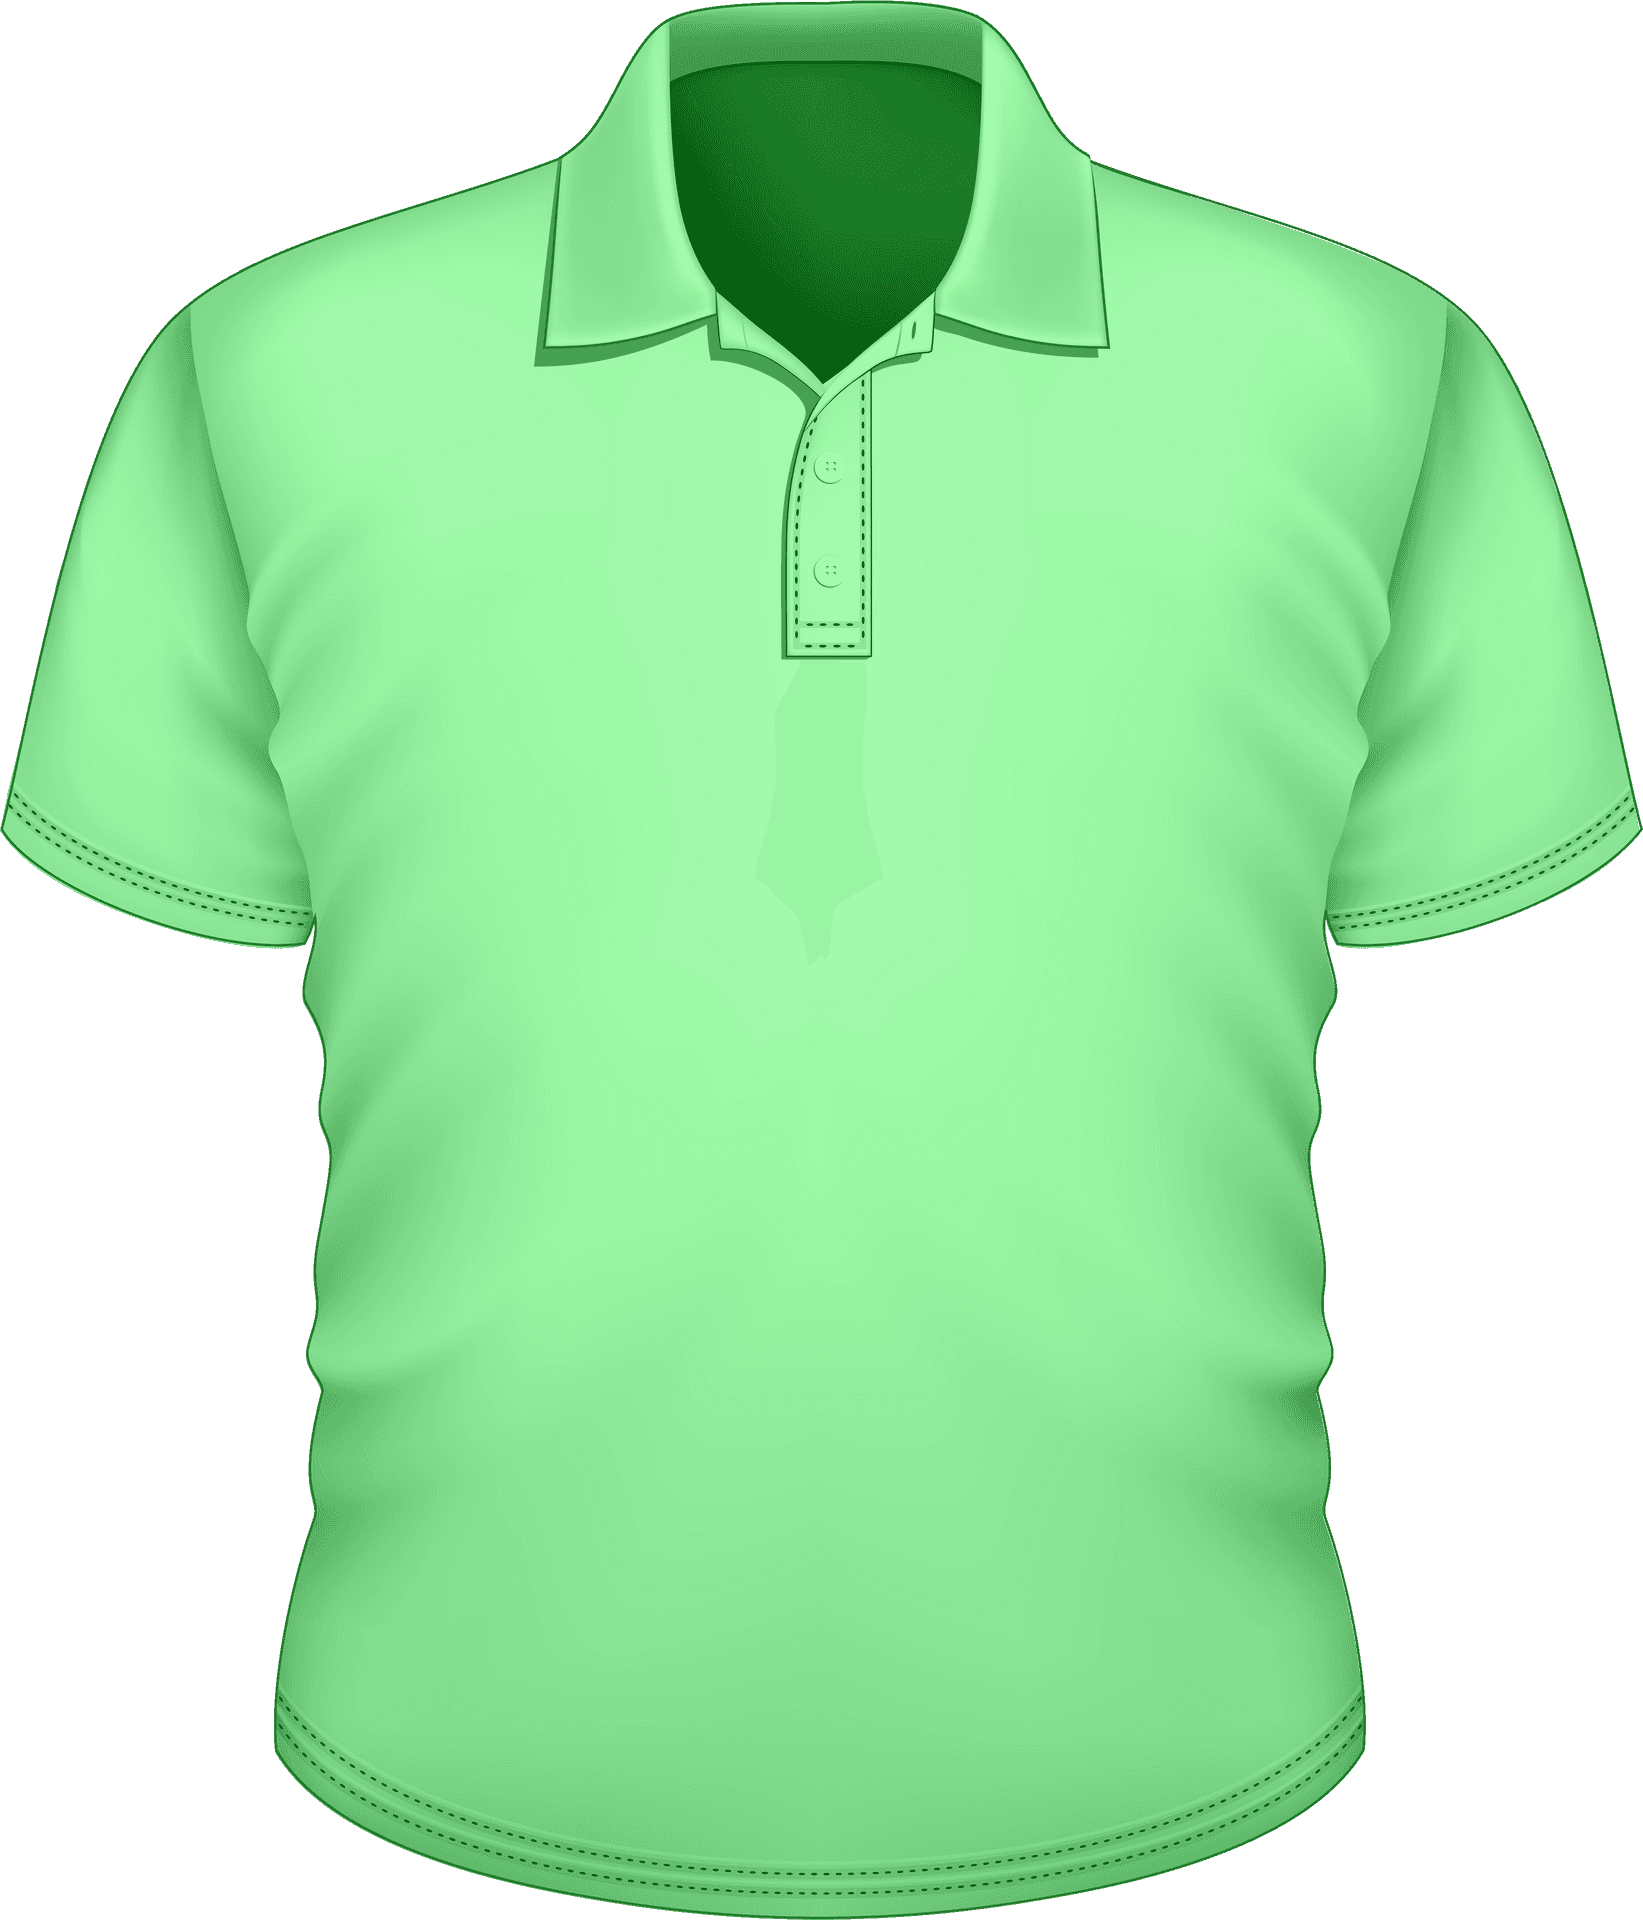 Download Green Polo Shirt Mockup | Wallpapers.com